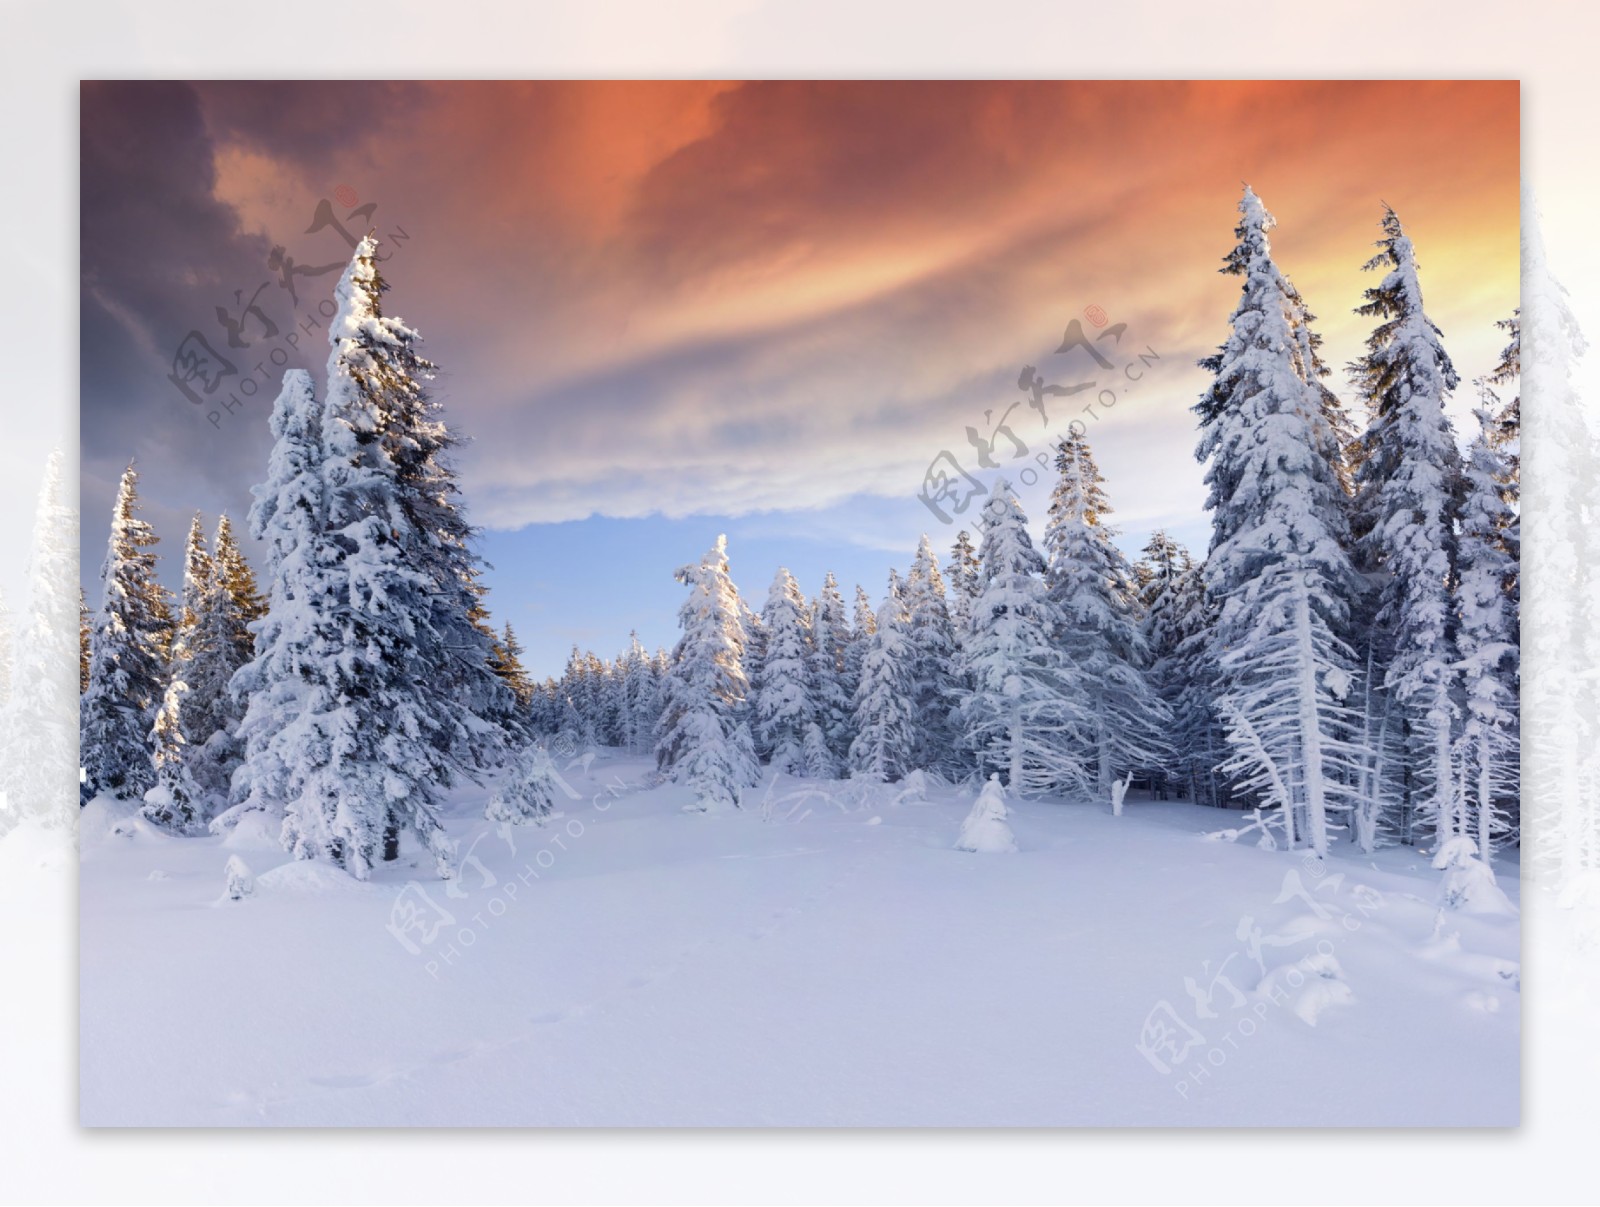 树林雪景与雪地风景